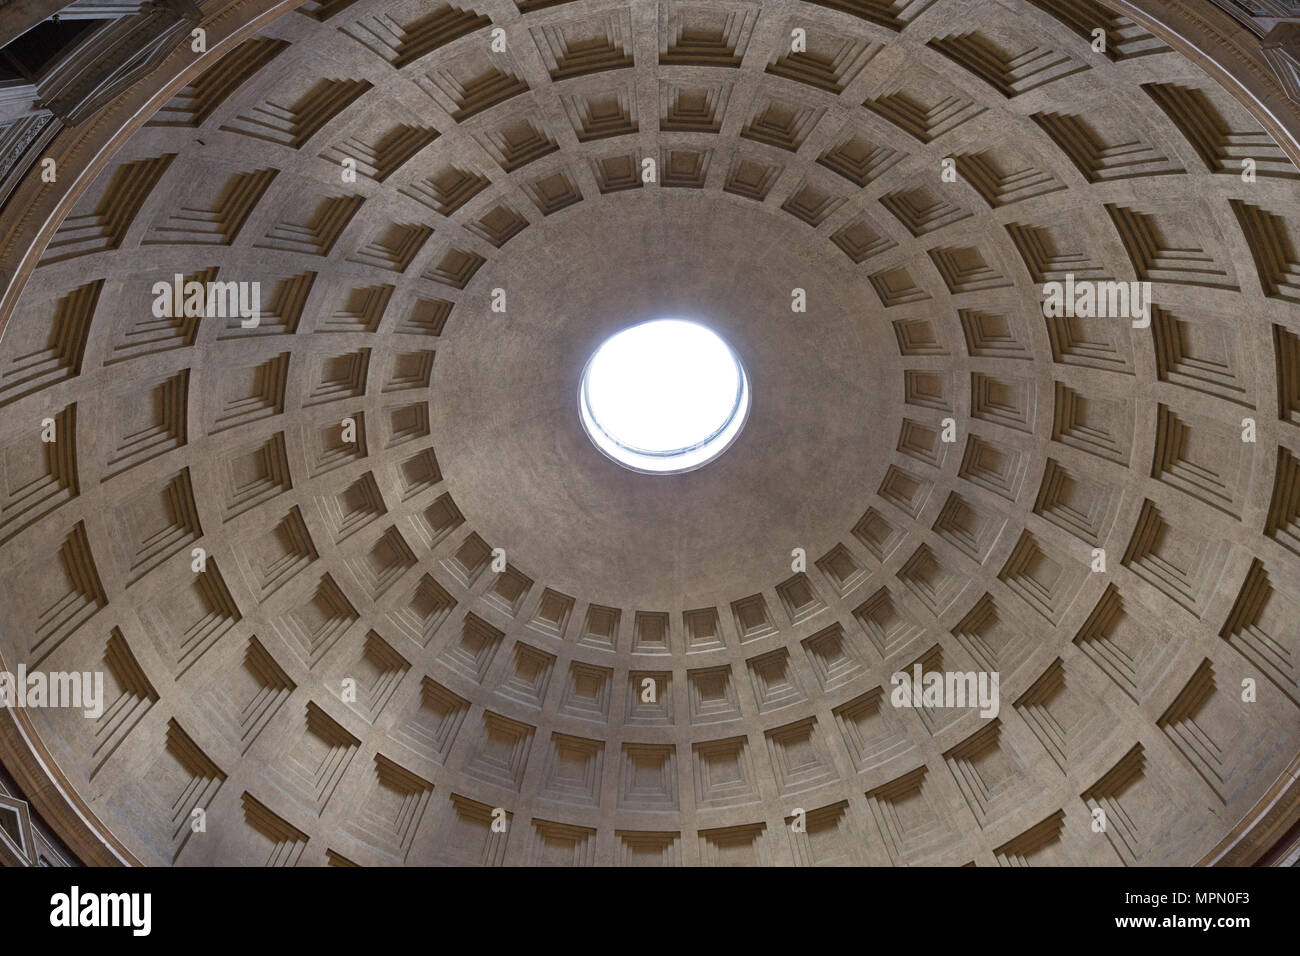 Pantheon Rome Italy, scene Stock Photo